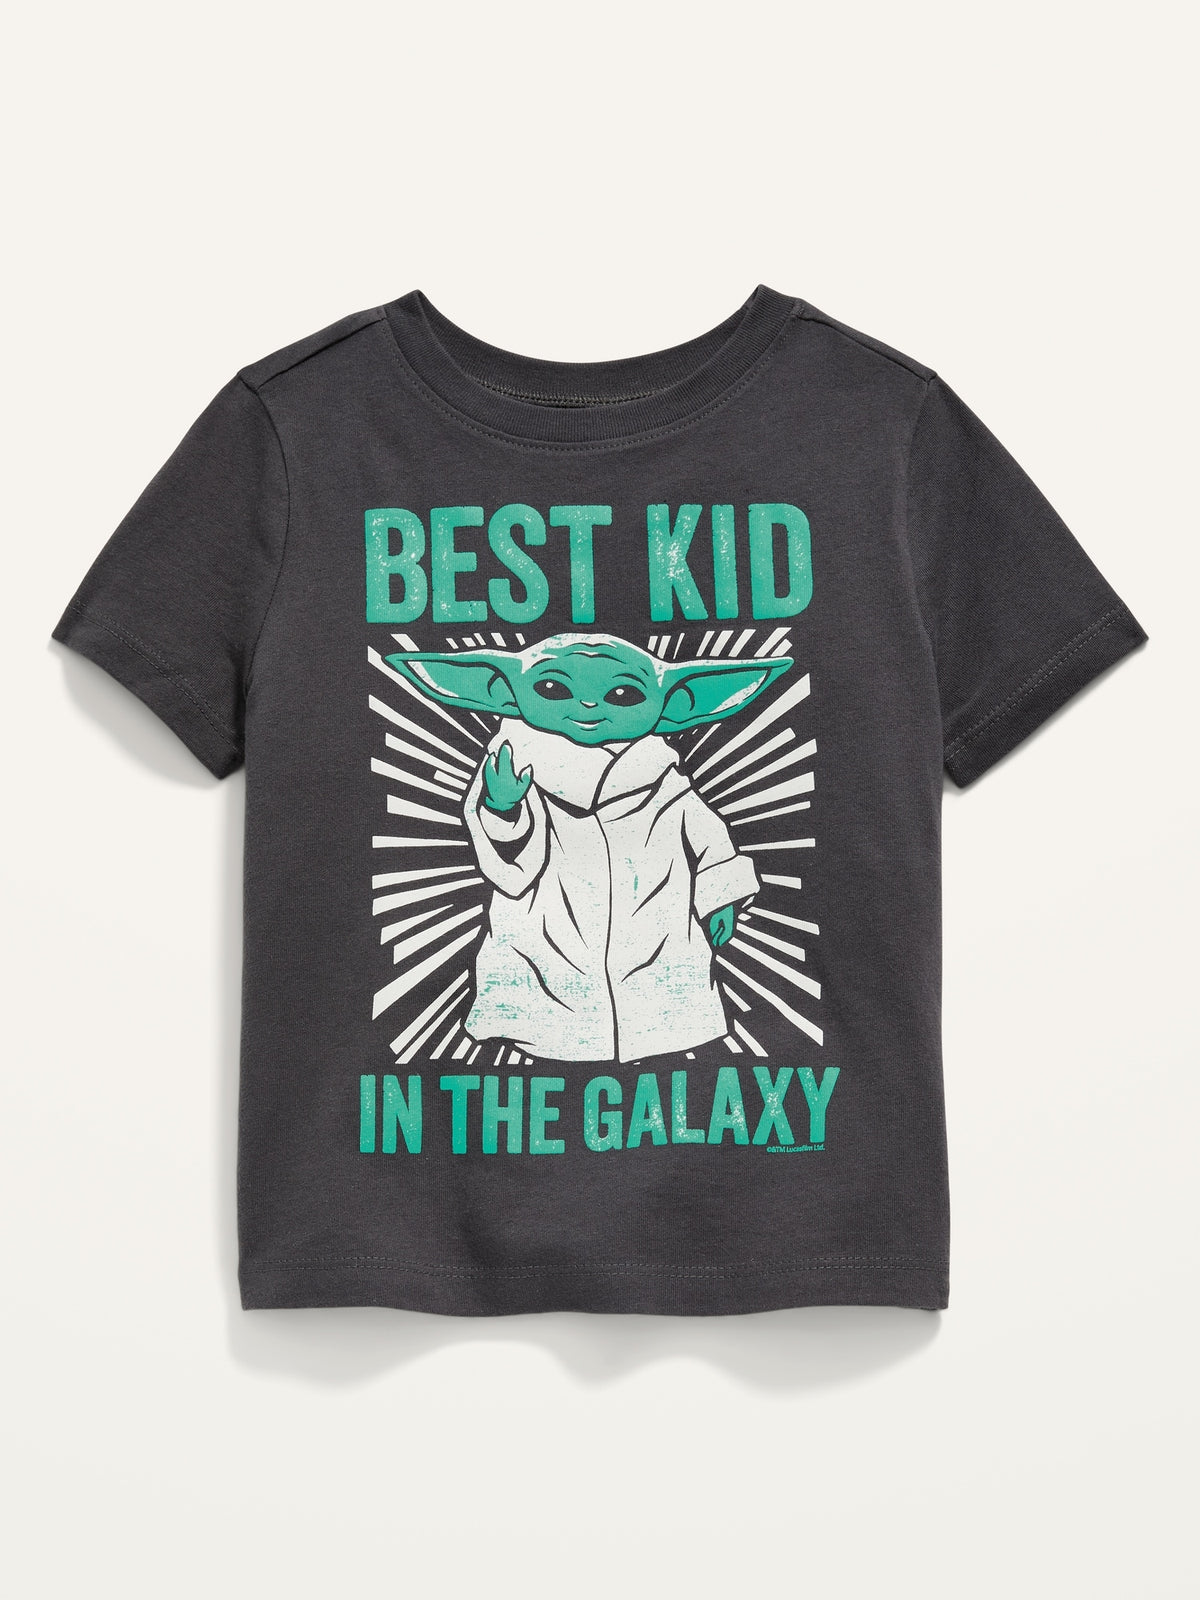 Best Kid In The Galaxy (Star Wars)